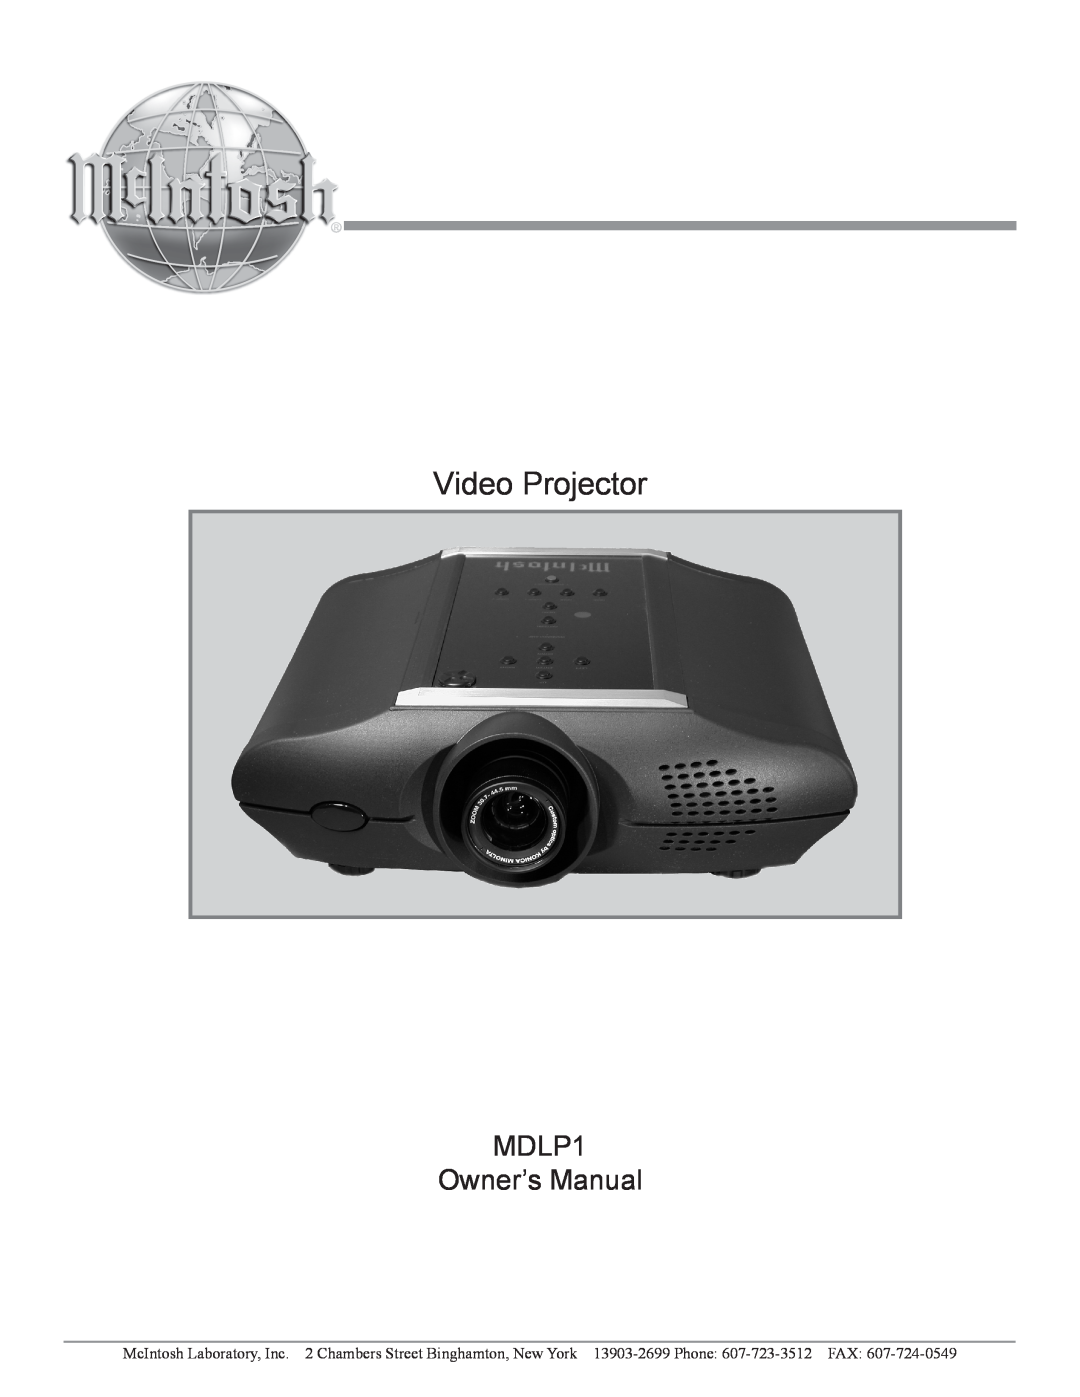 McIntosh MDLP1 owner manual Video Projector 